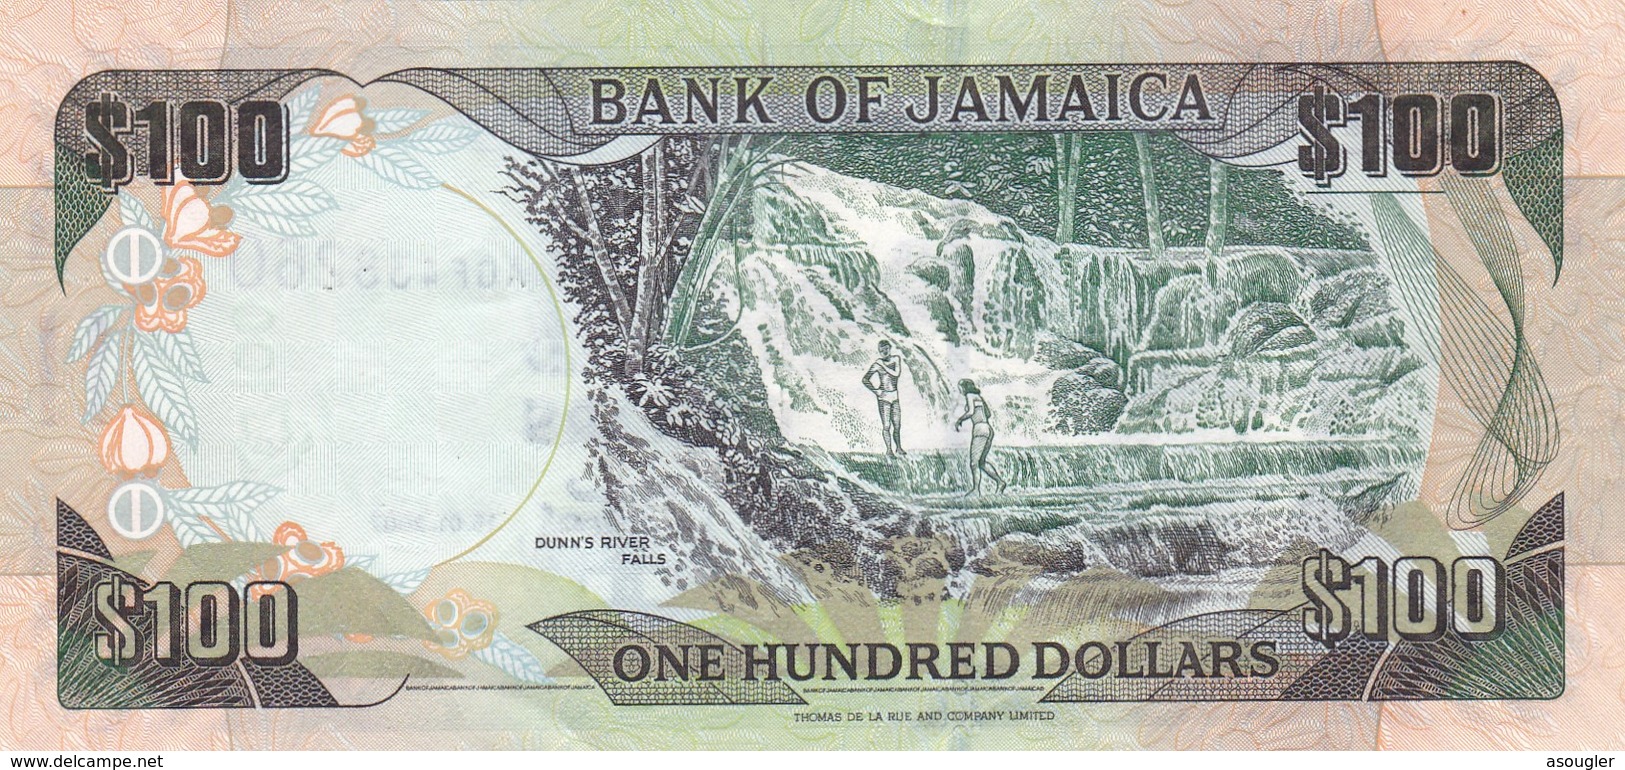 Jamaica 100 Dollars 2007 VF (free Shipping Via Regular Air Mail - Buyer Risk) - Jamaique